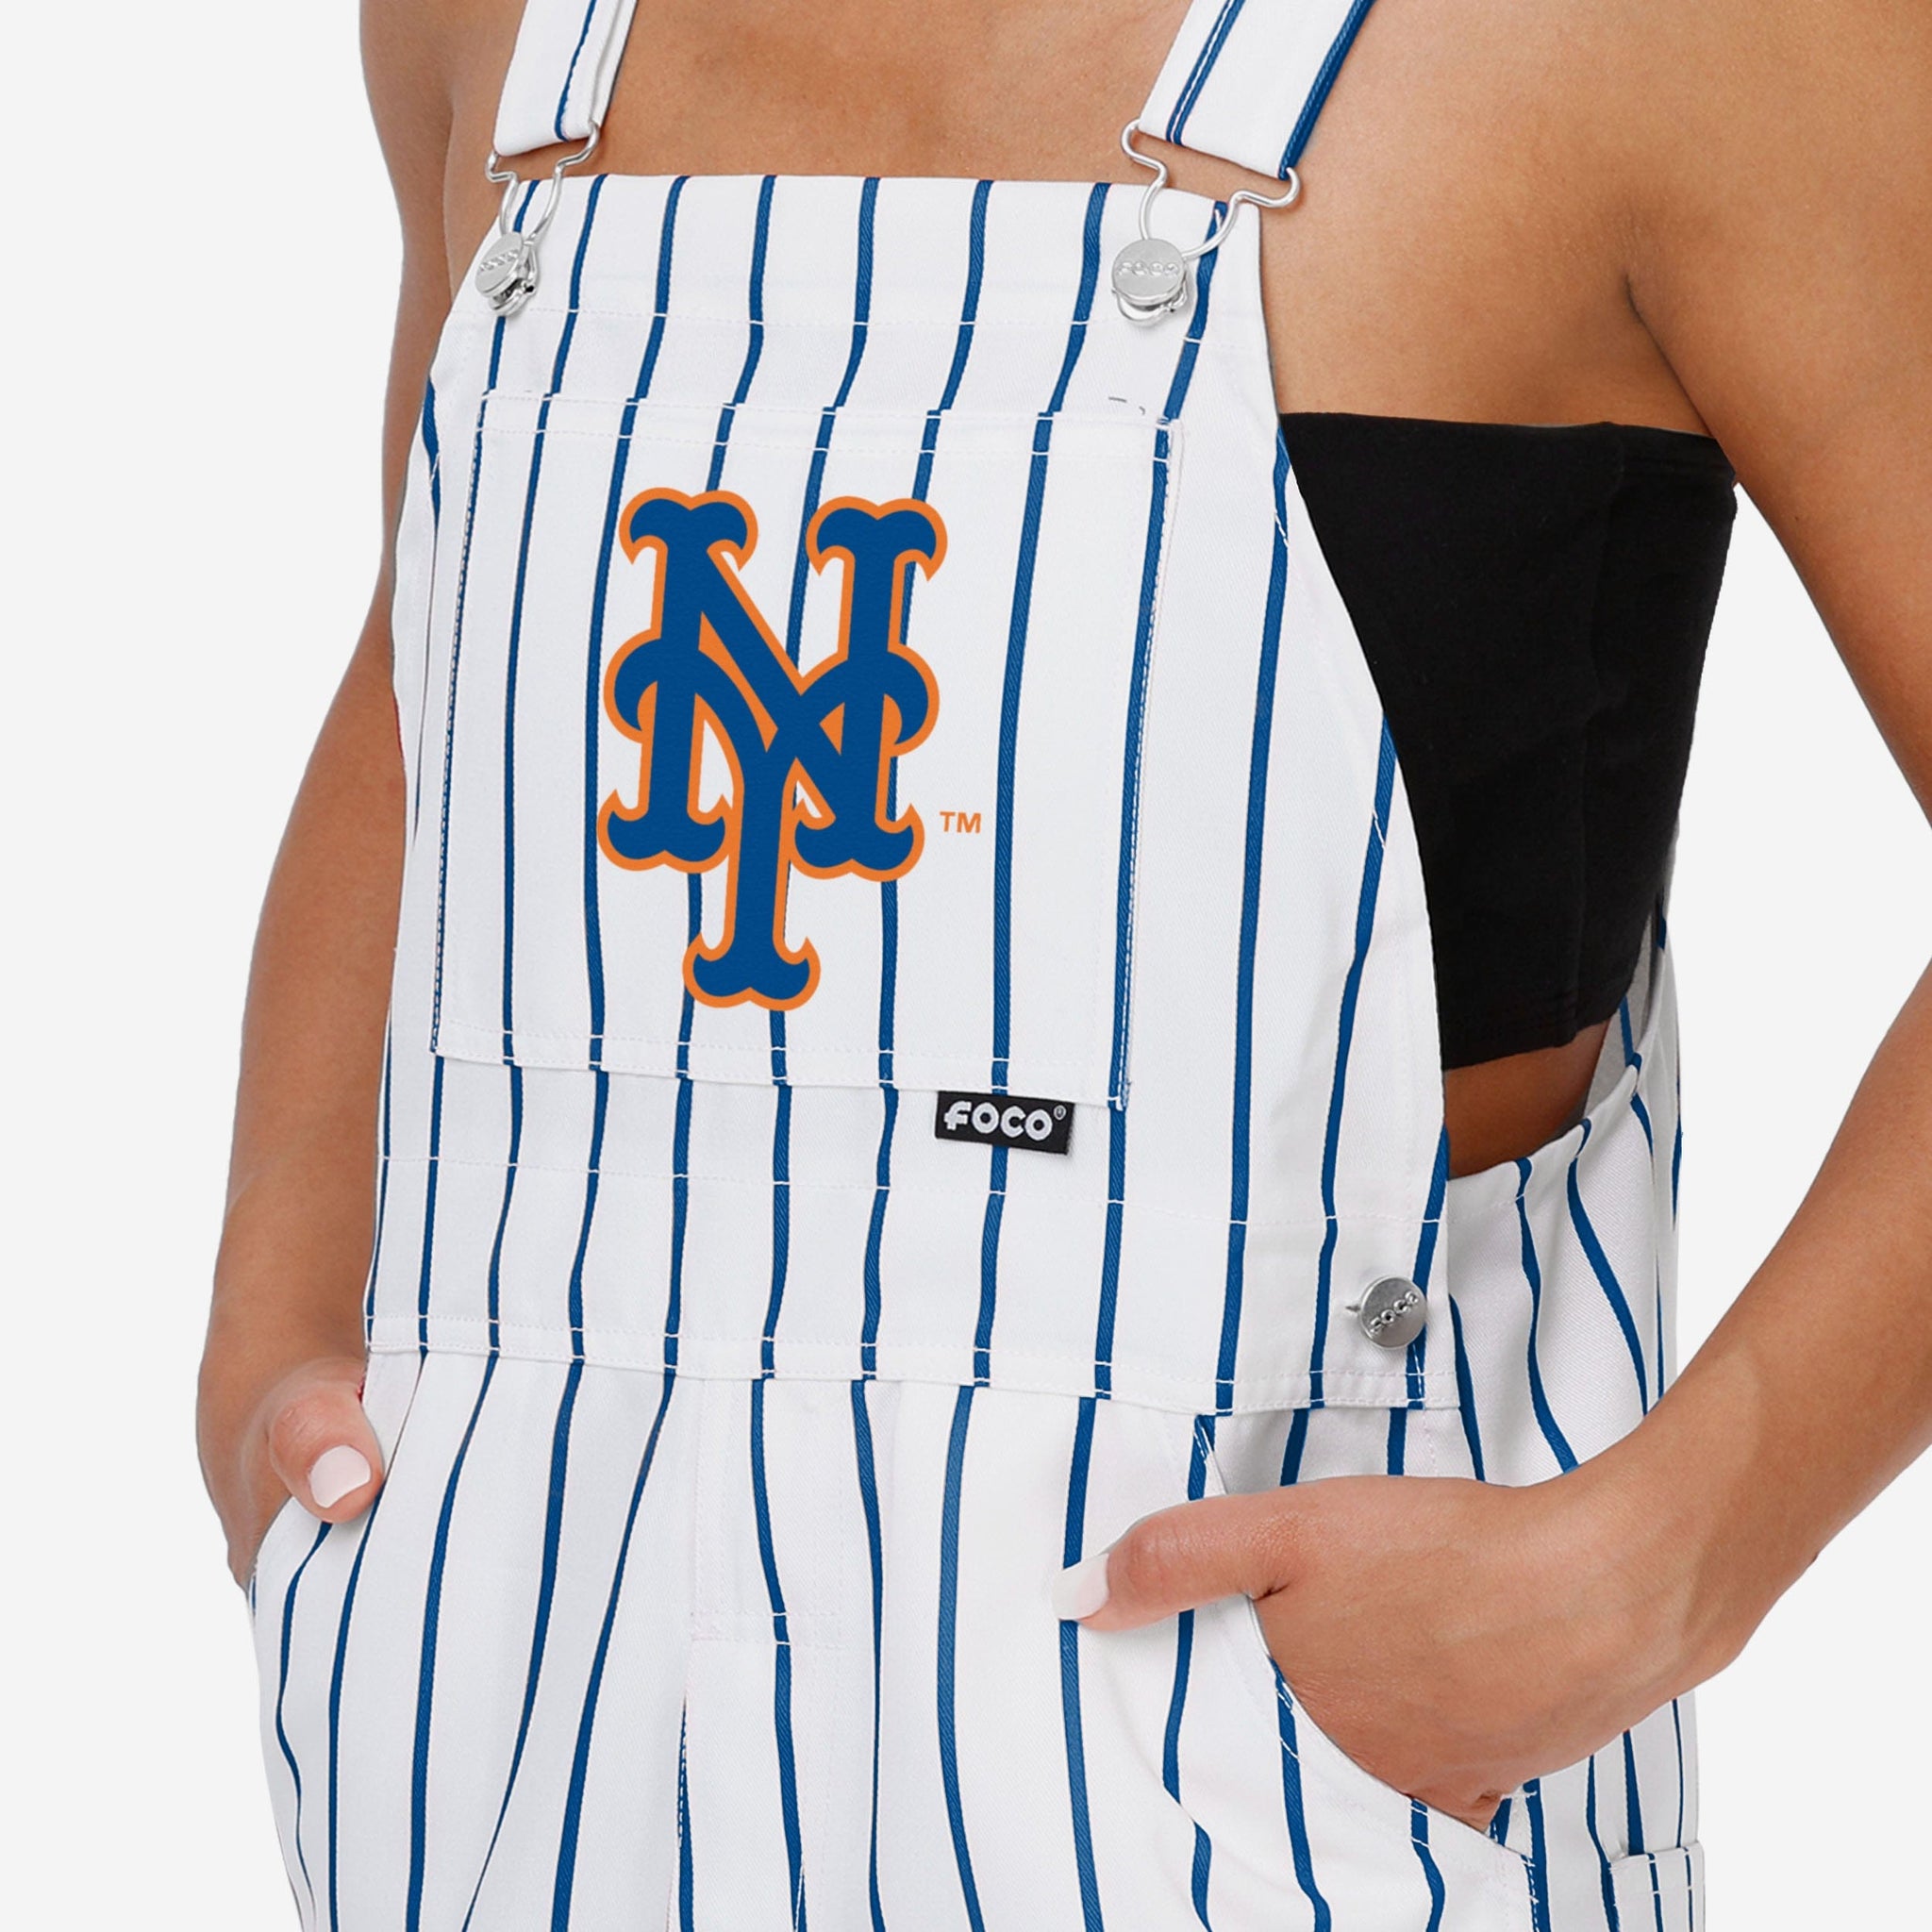 FOCO New York Mets Womens Pinstripe Bib Overalls, Size: L